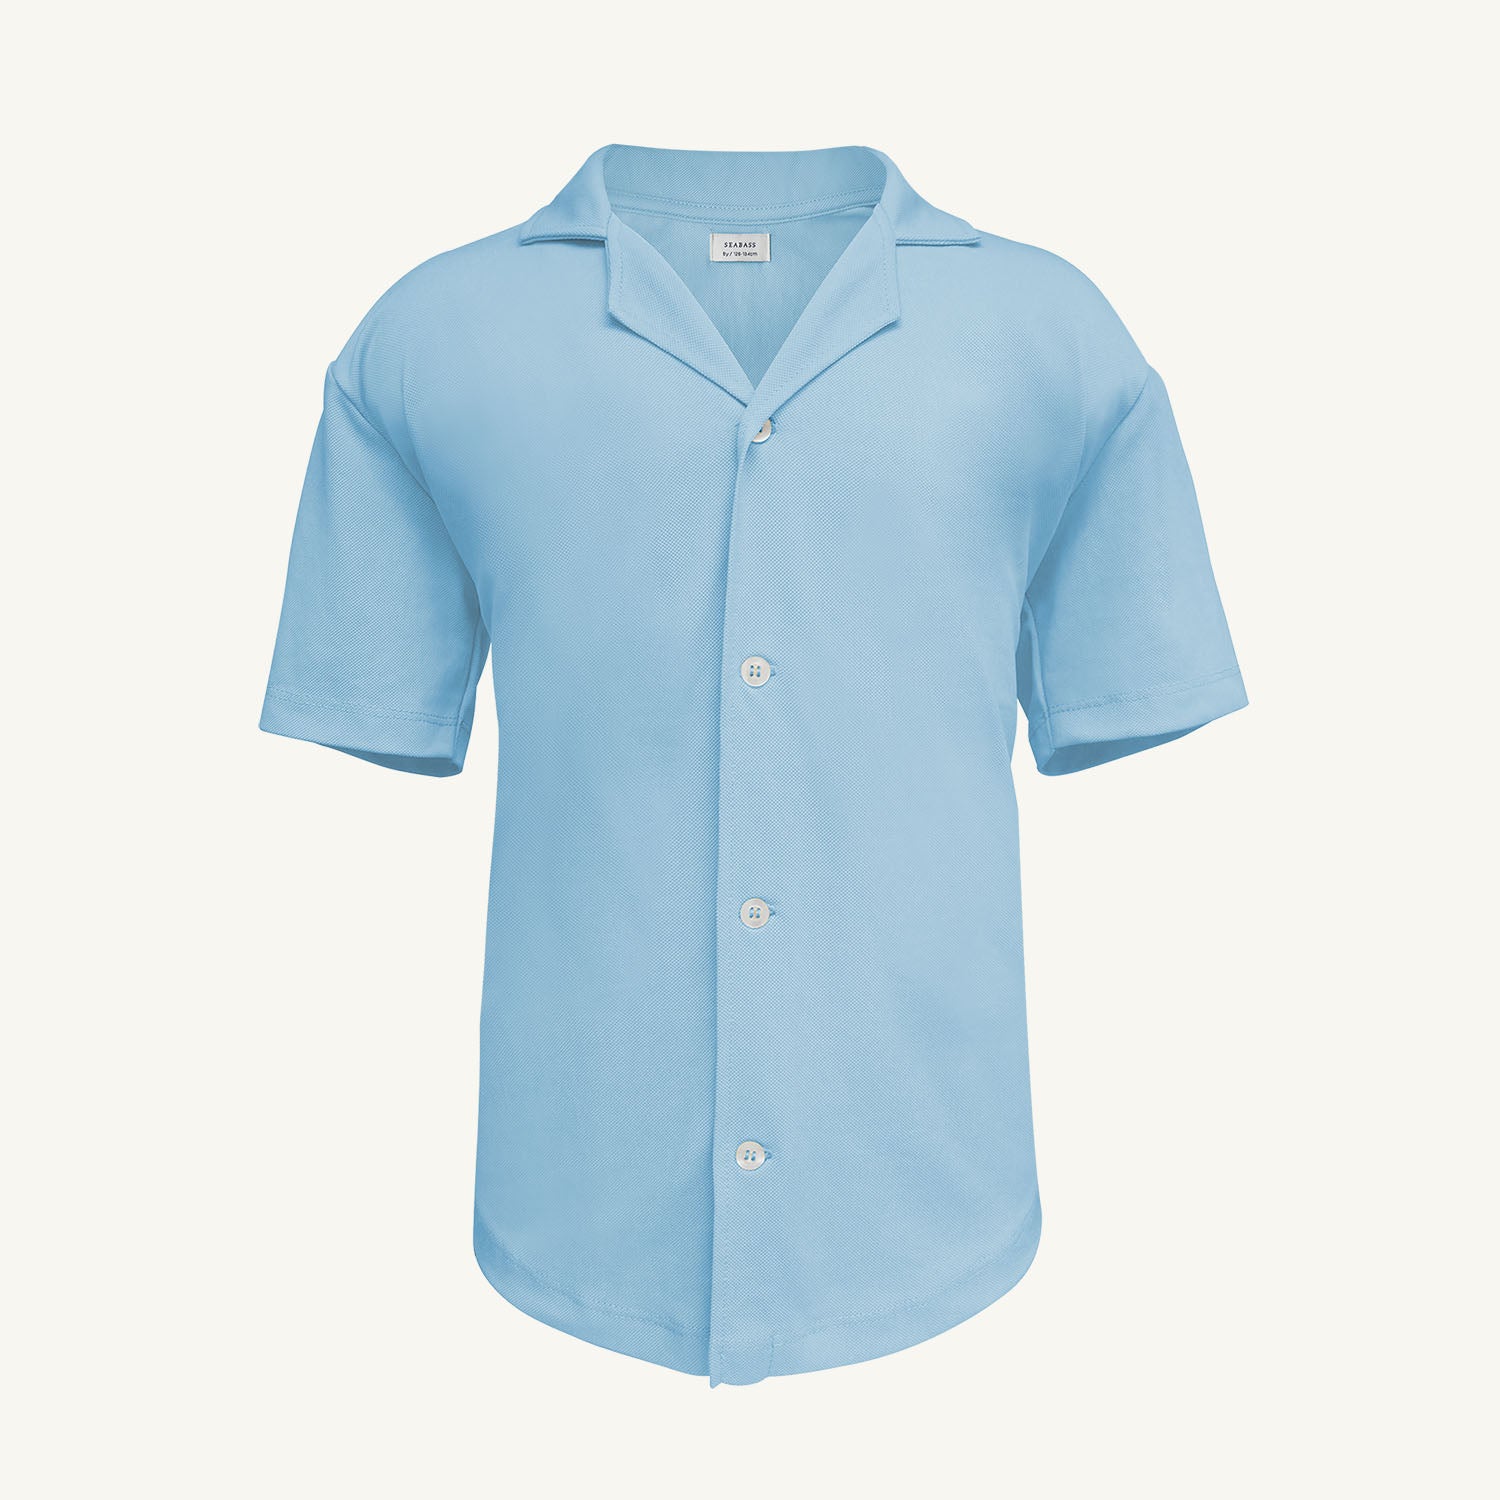 Männer UV Hemd Kurzarm mit UV-Schutz - Hellblau